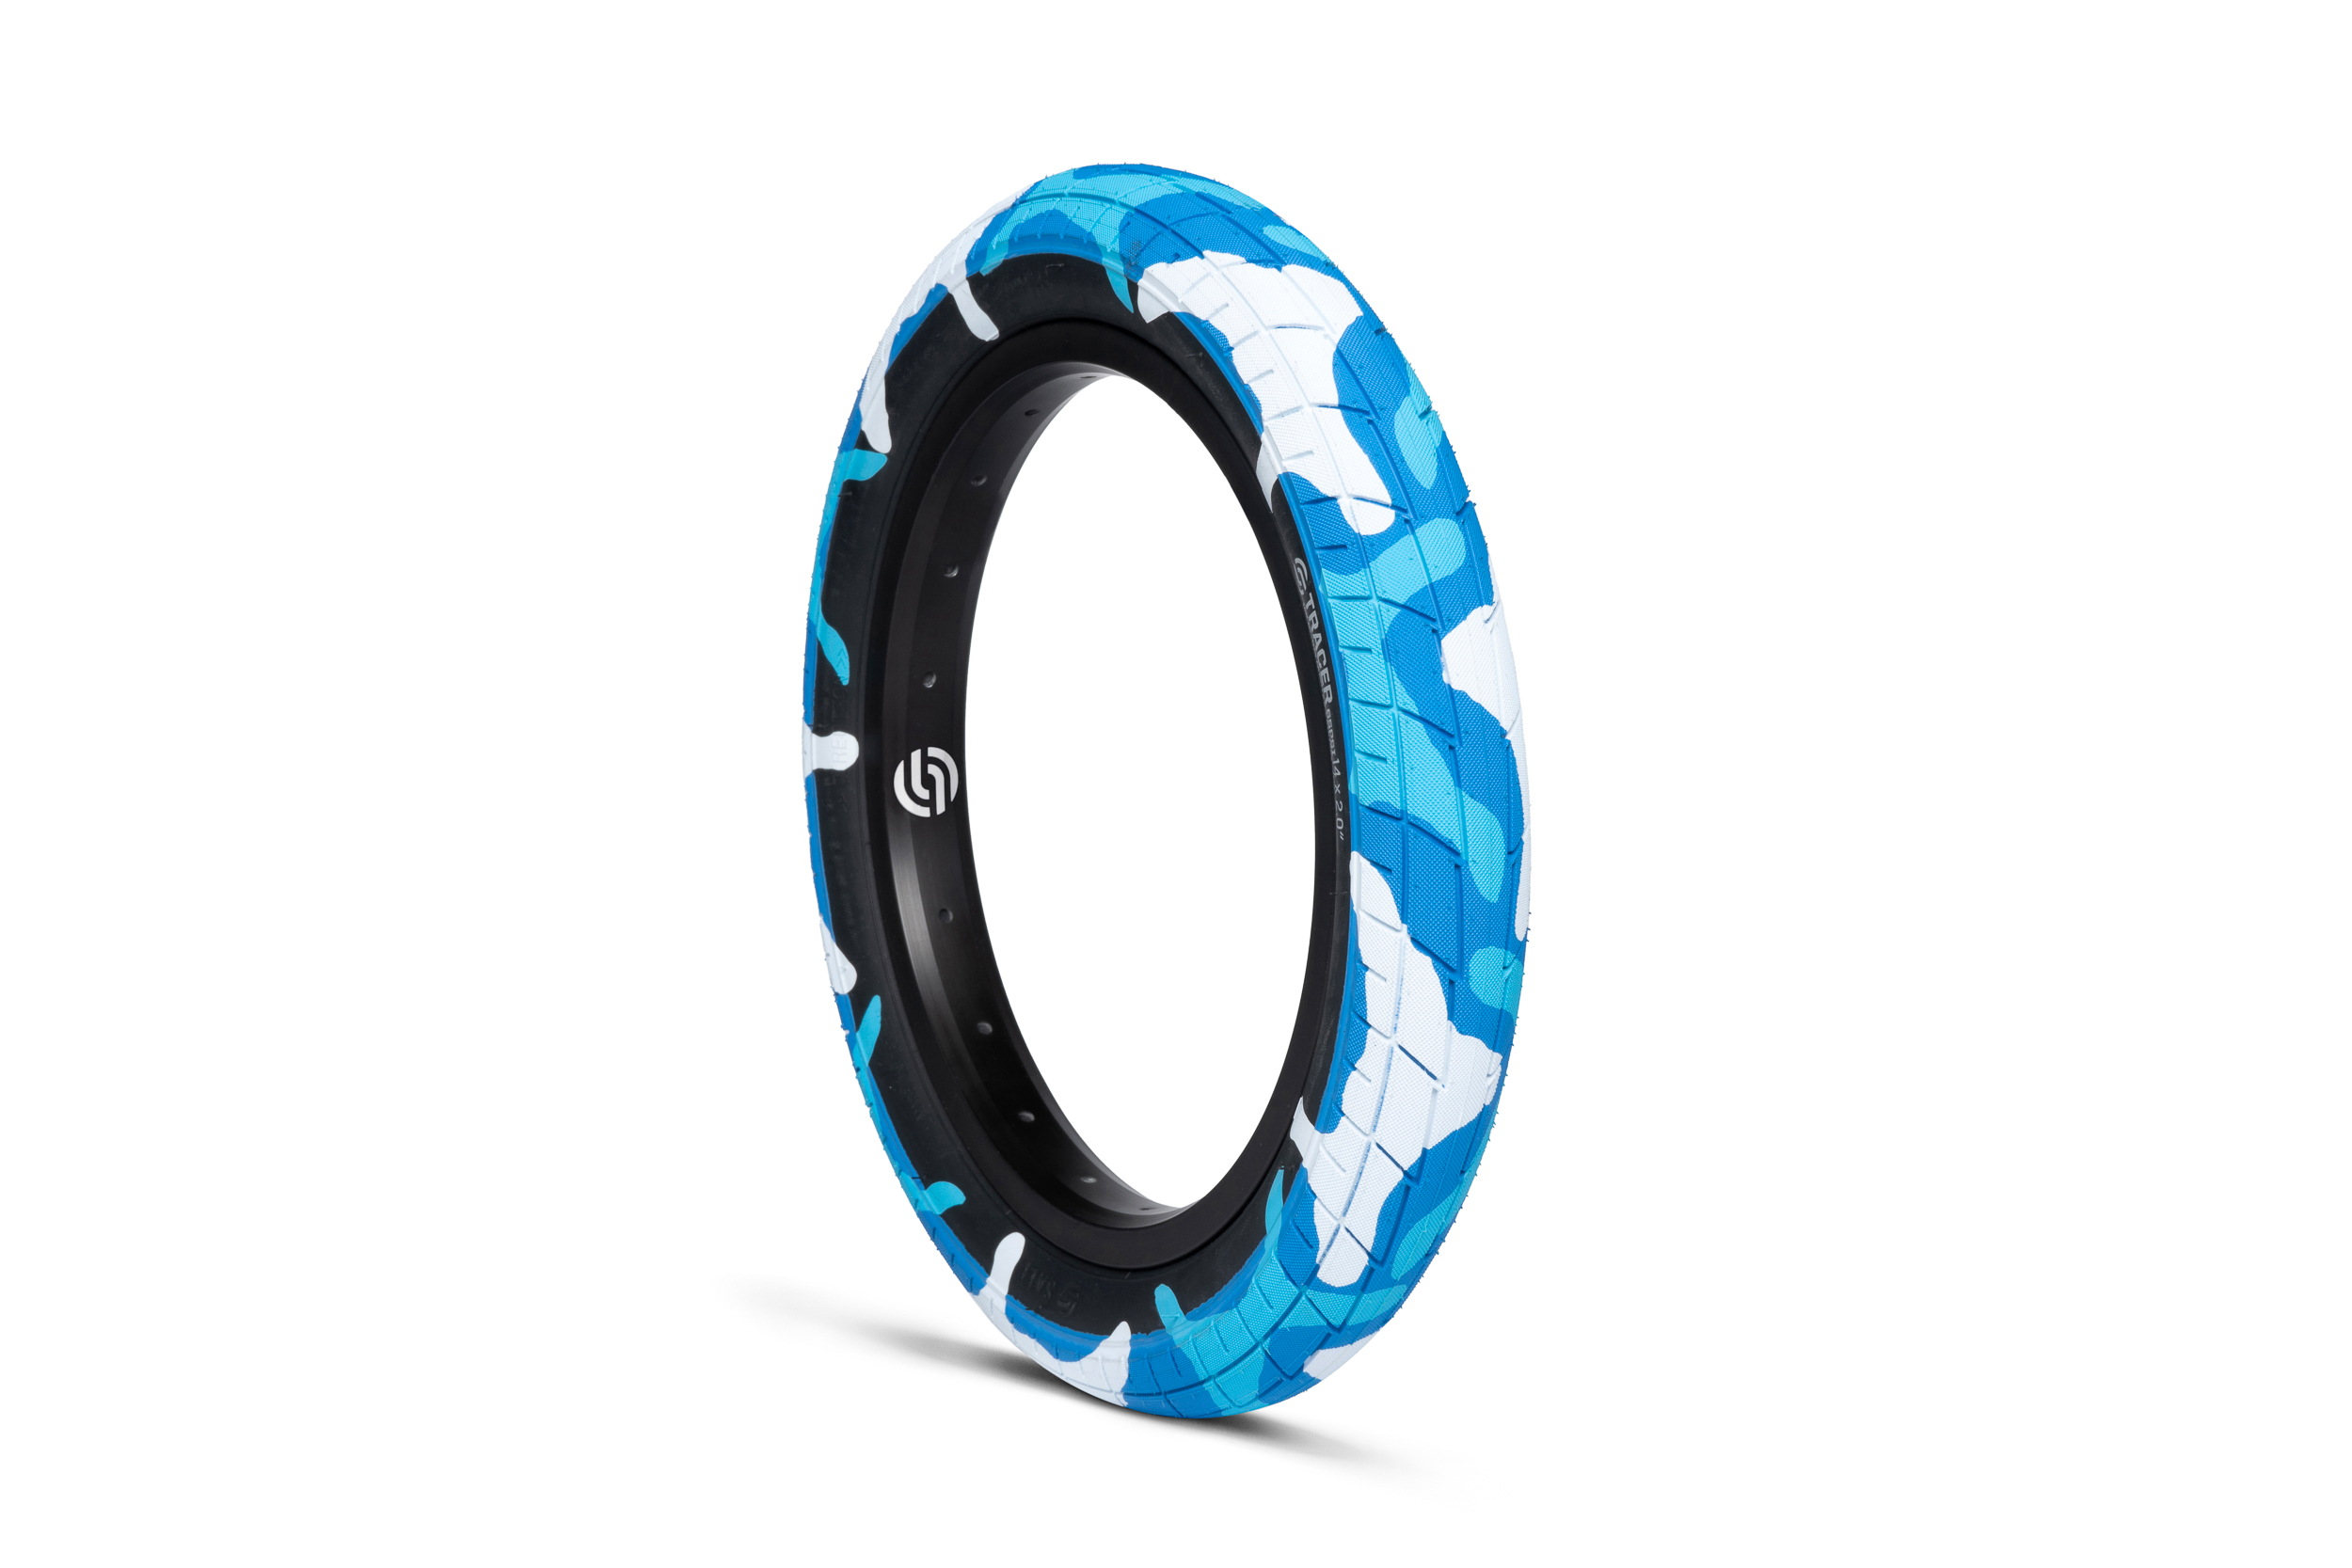 Salt Tracer Tire - 14 x 2.35 Blue Camo (1)